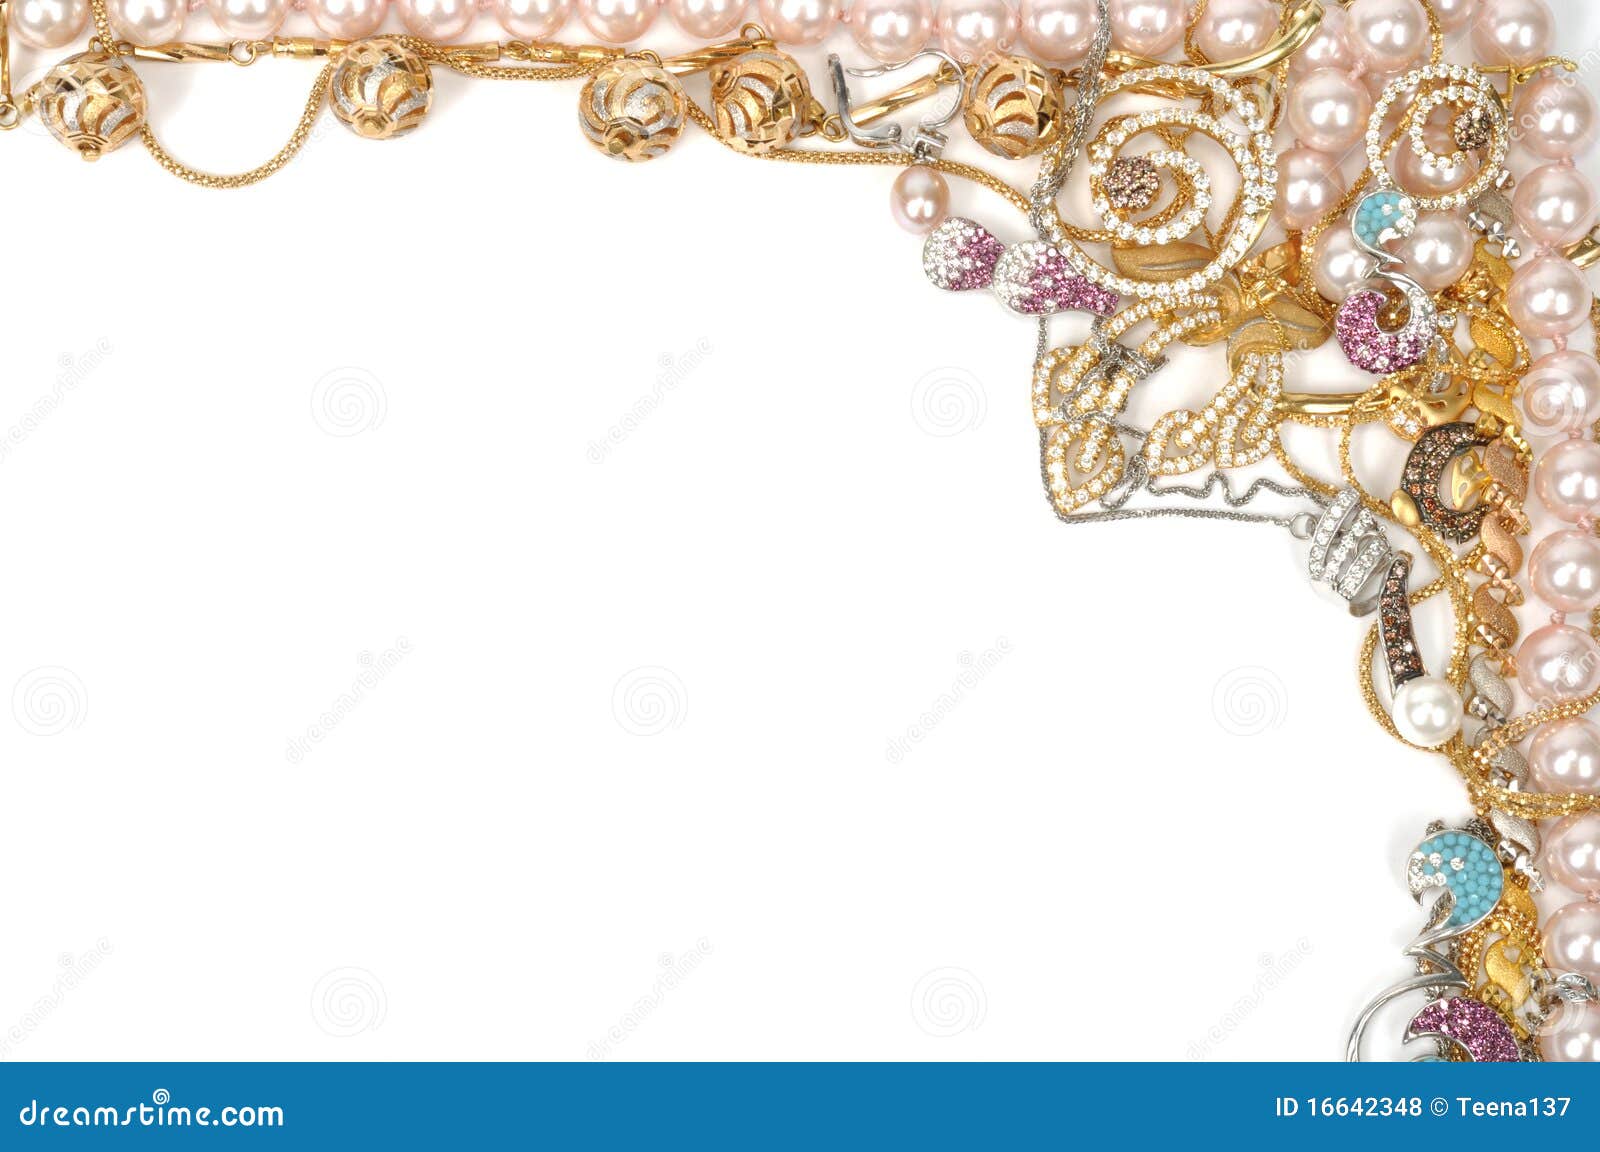 jewelry clip art borders - photo #10